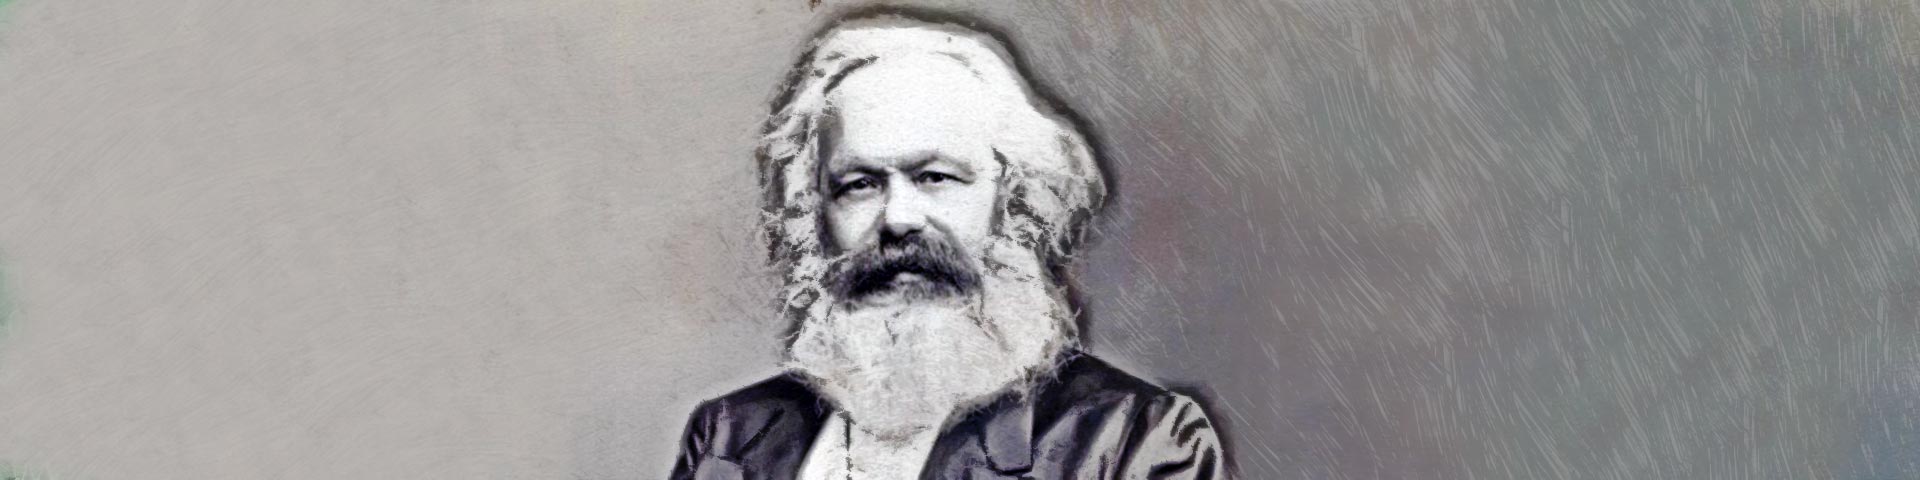 Lega. Illegal, Karl Marx